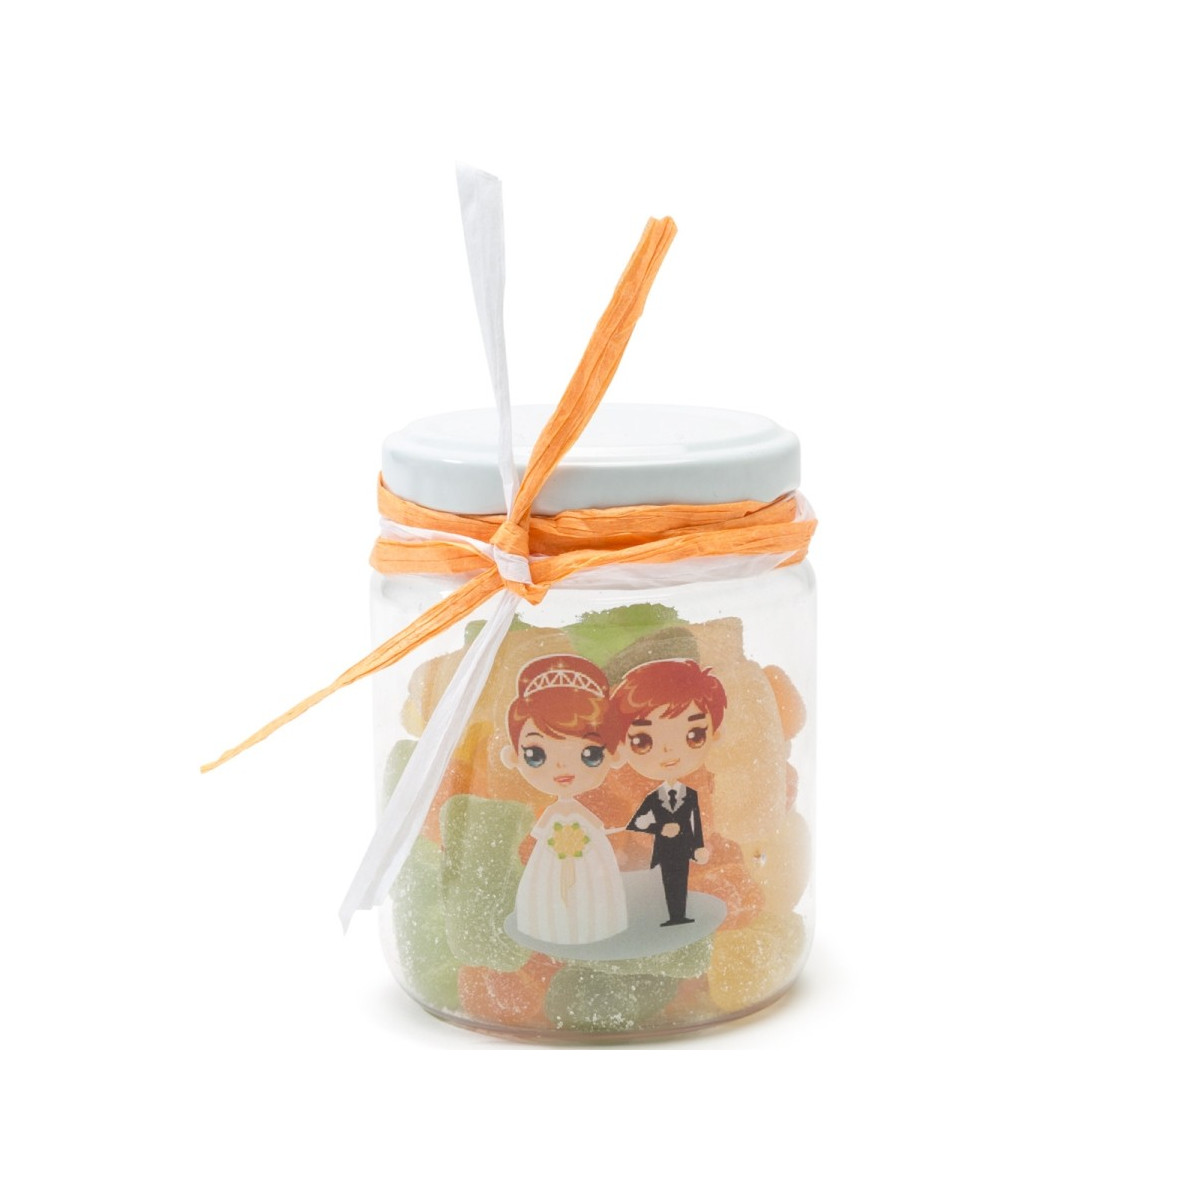 Jelly jar per matrimonio